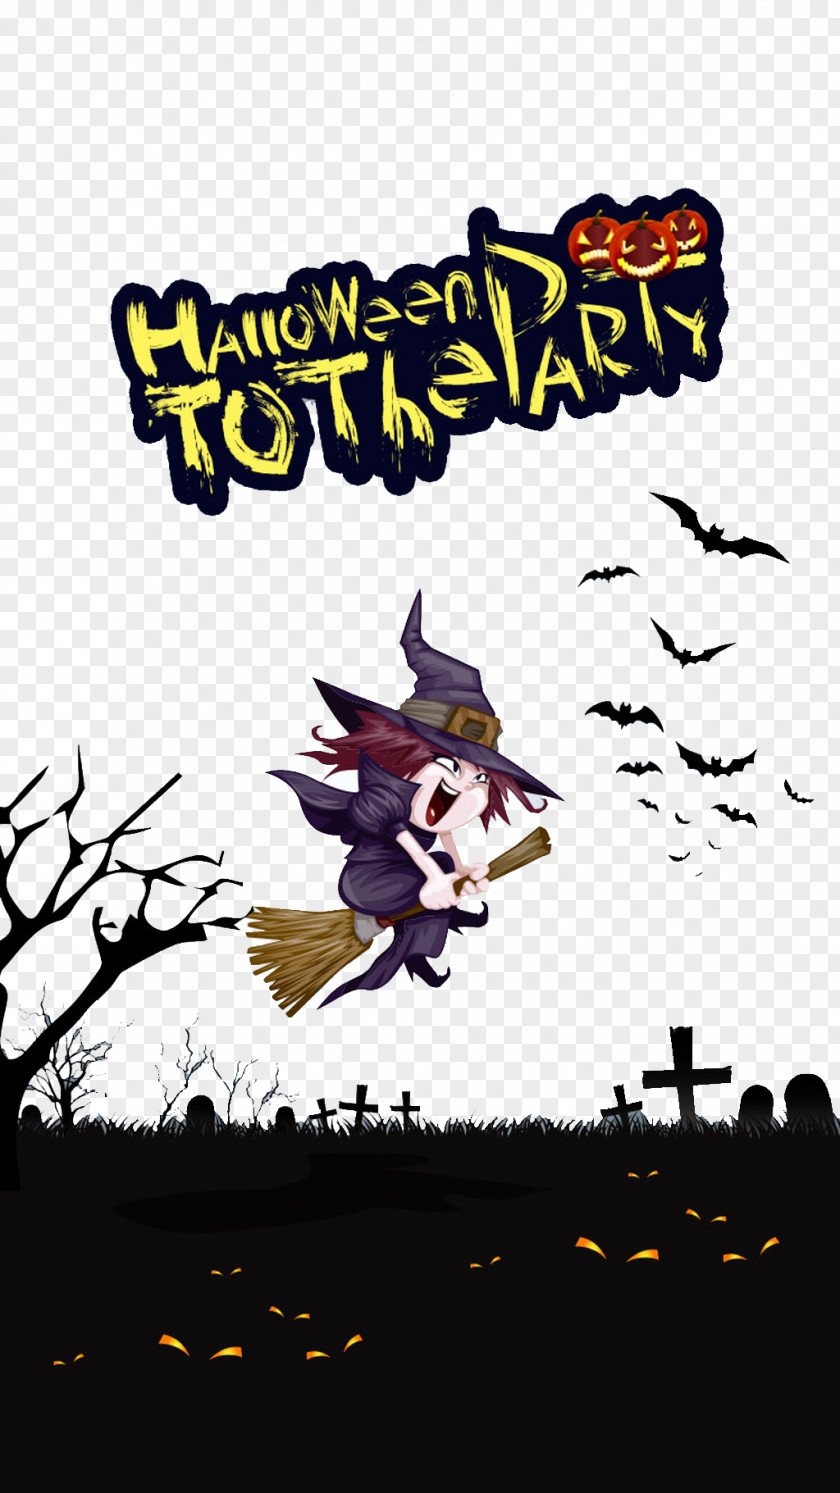 Halloween Bat Flying Illustration PNG